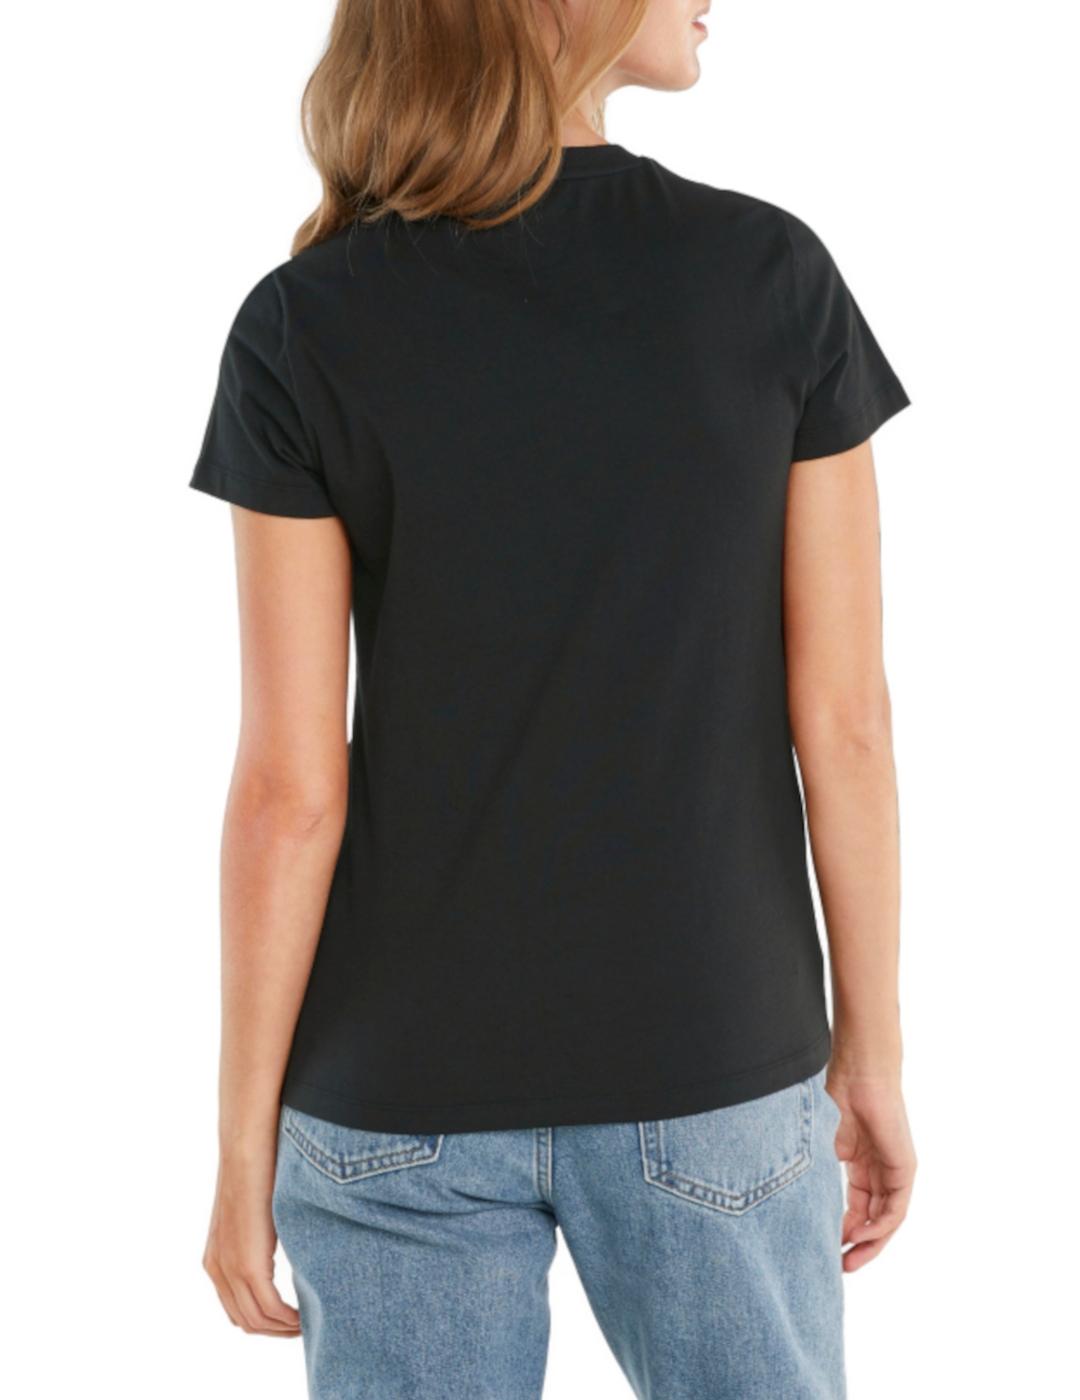 Camiseta Puma INTL negro para mujer-z